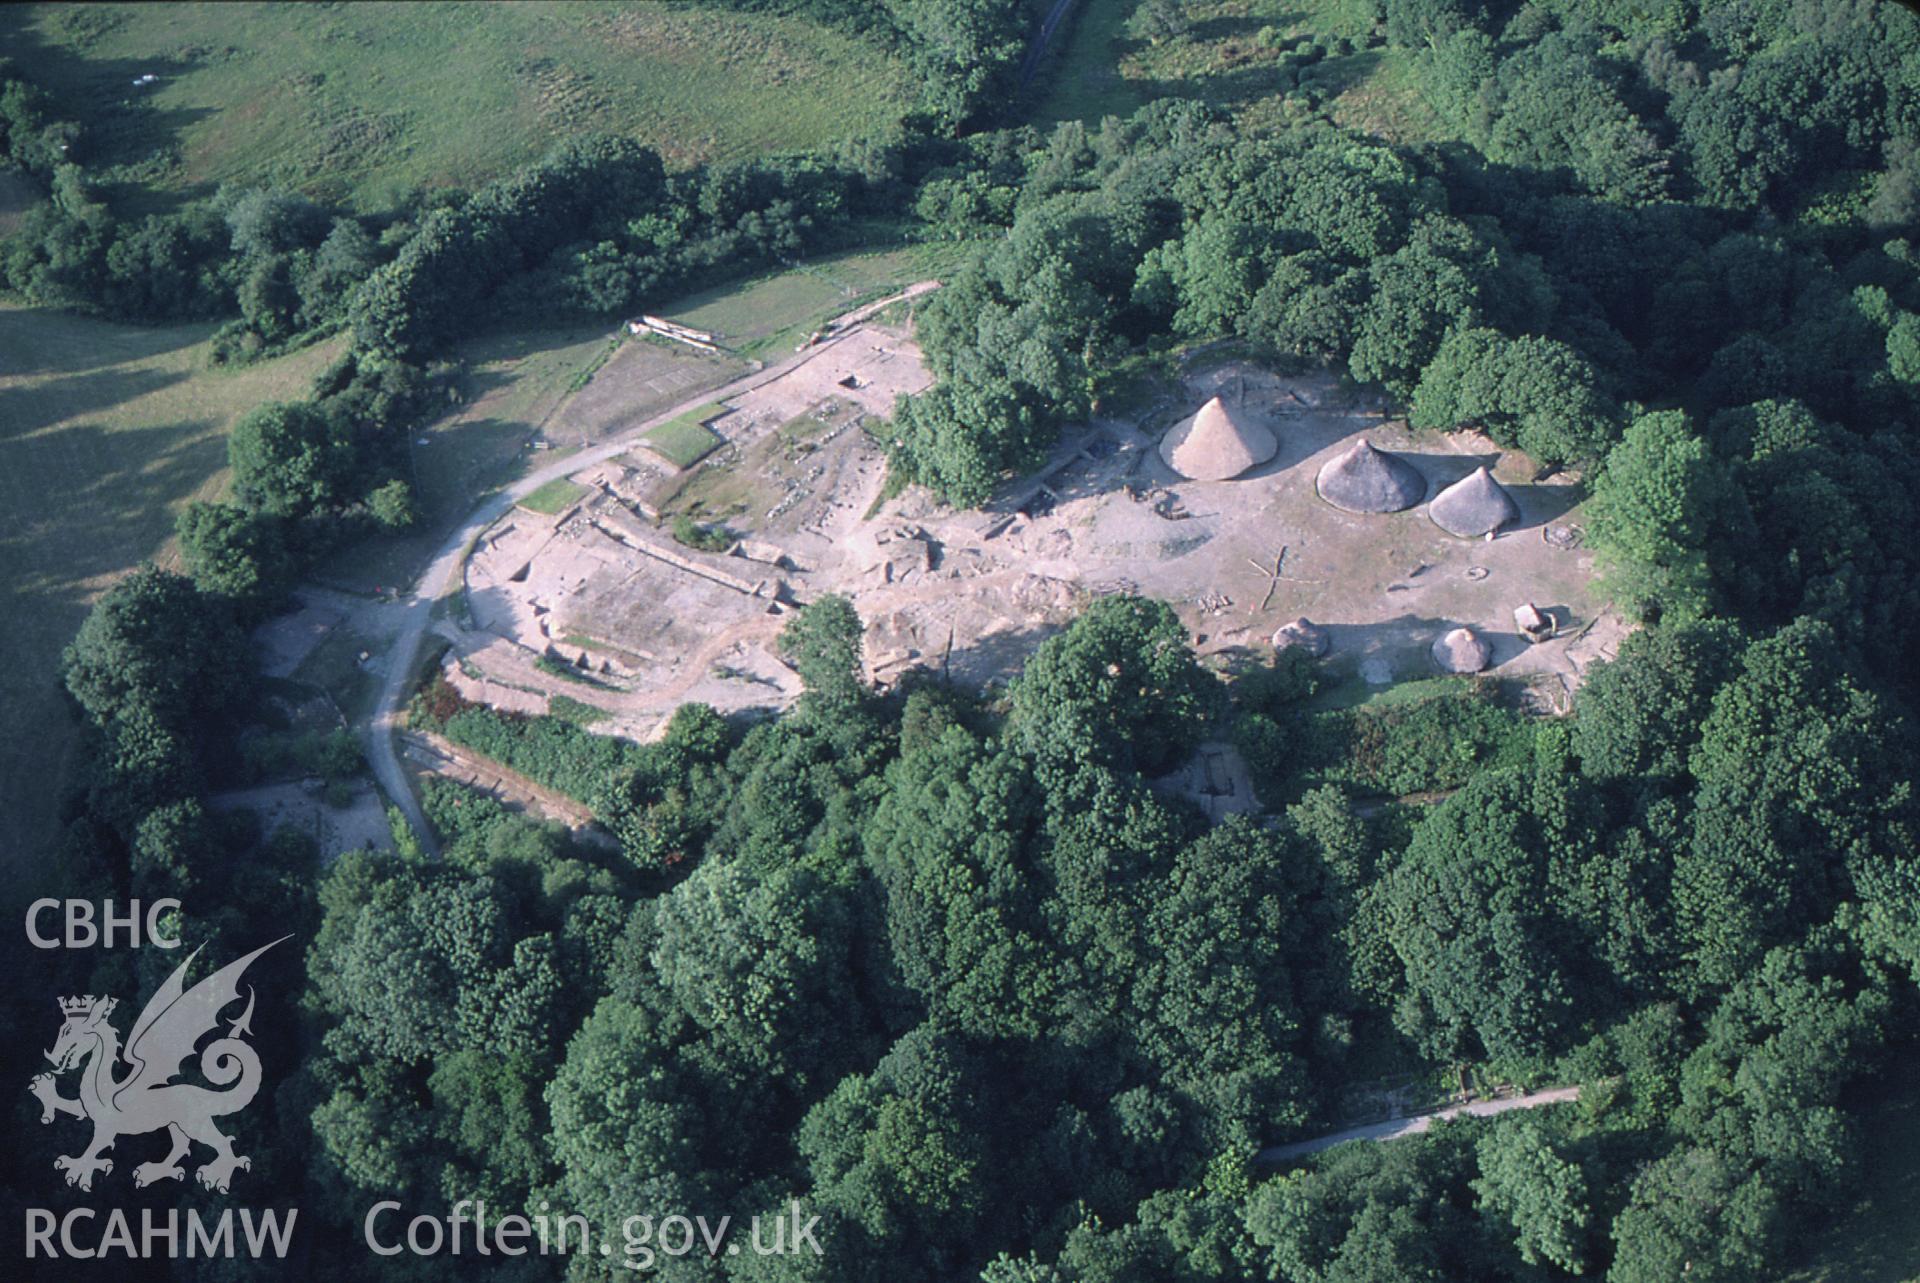 RCAHMW colour slide oblique aerial photograph of Castell Henllys, Eglwyswrw, taken on 26/07/1999 by Ken Murphy